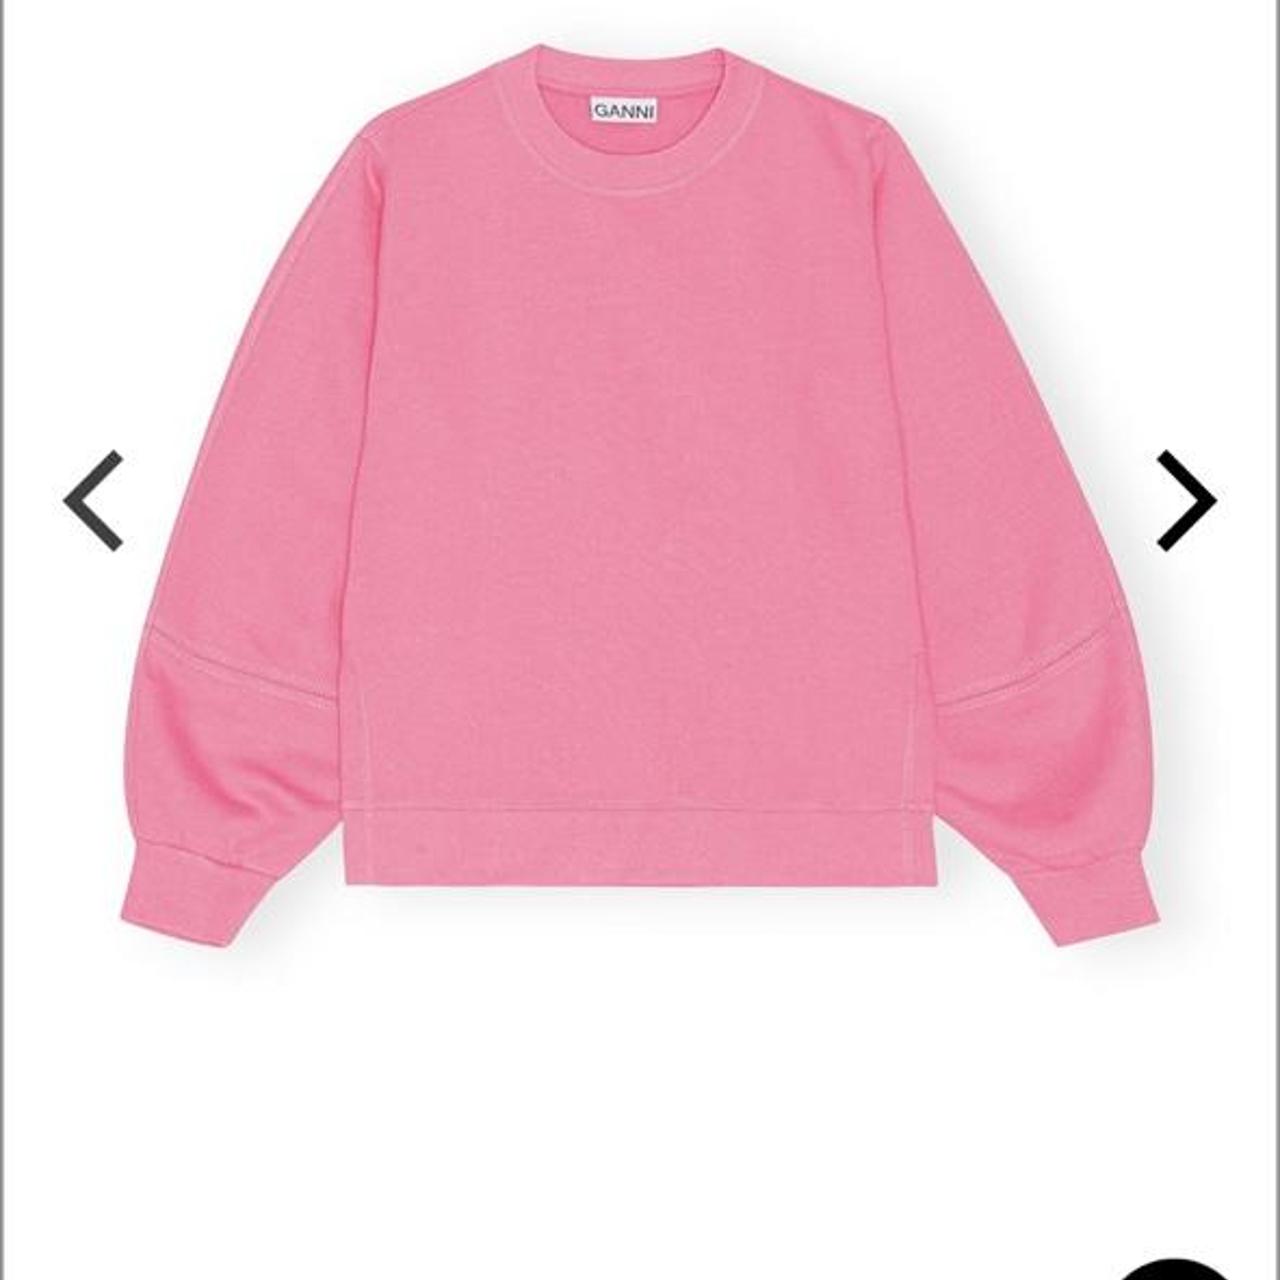 Ganni Women's Pink Sweatshirt